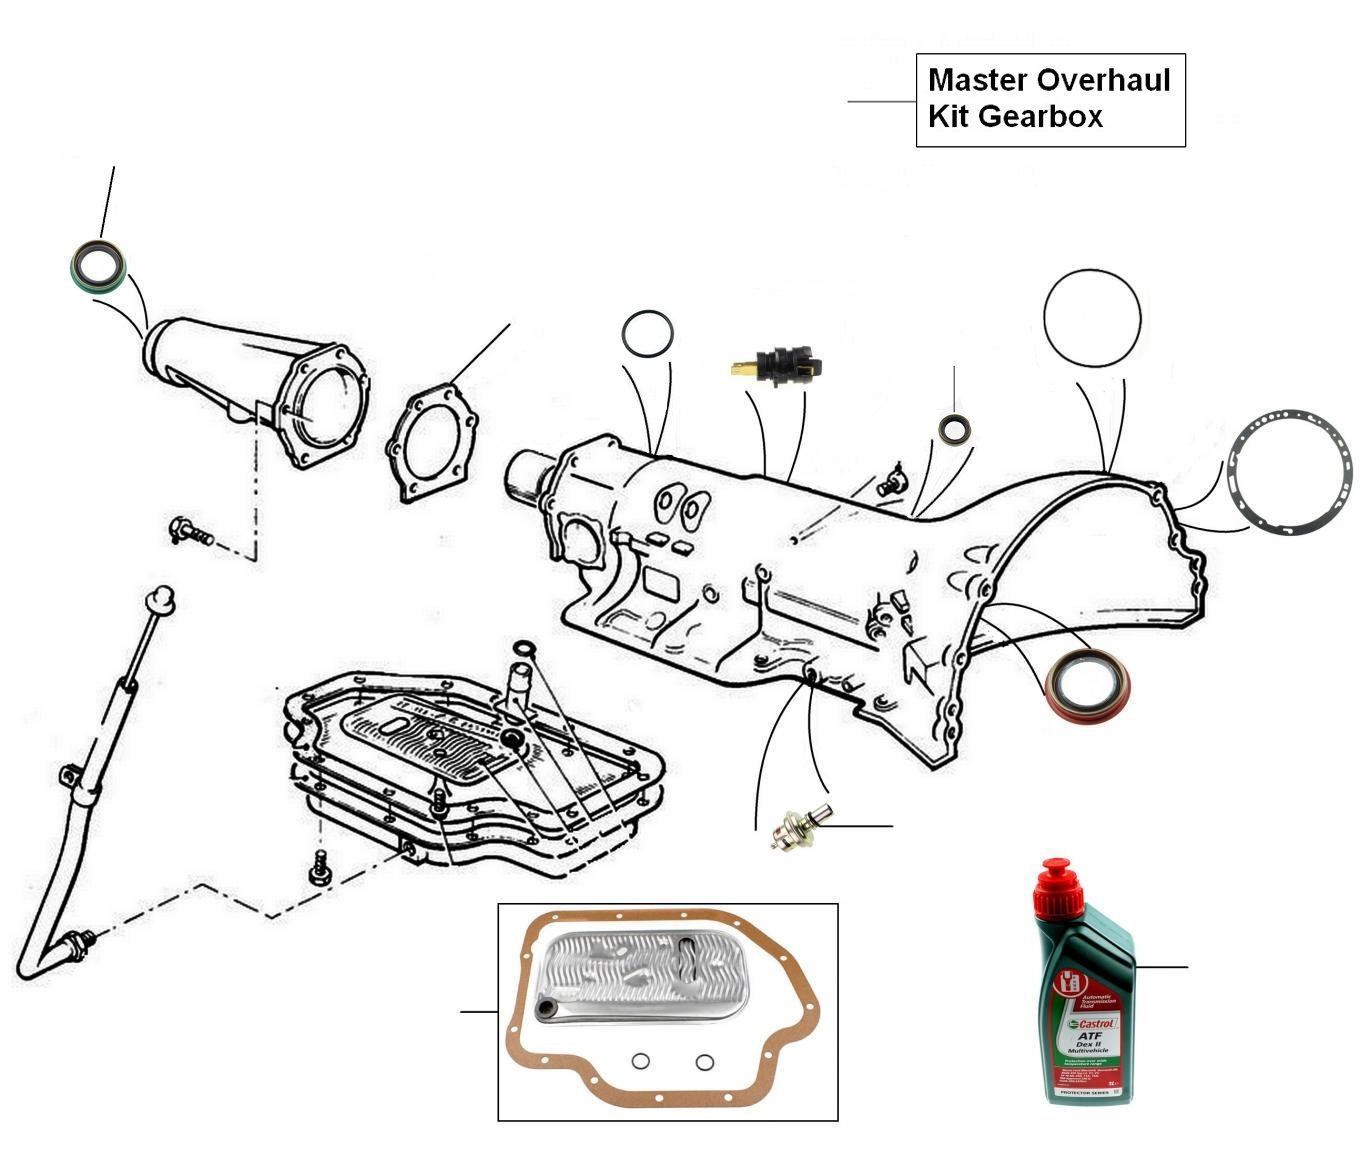 31023 Gearbox - Filter kit, Gasket, Seals & Overhaul kit